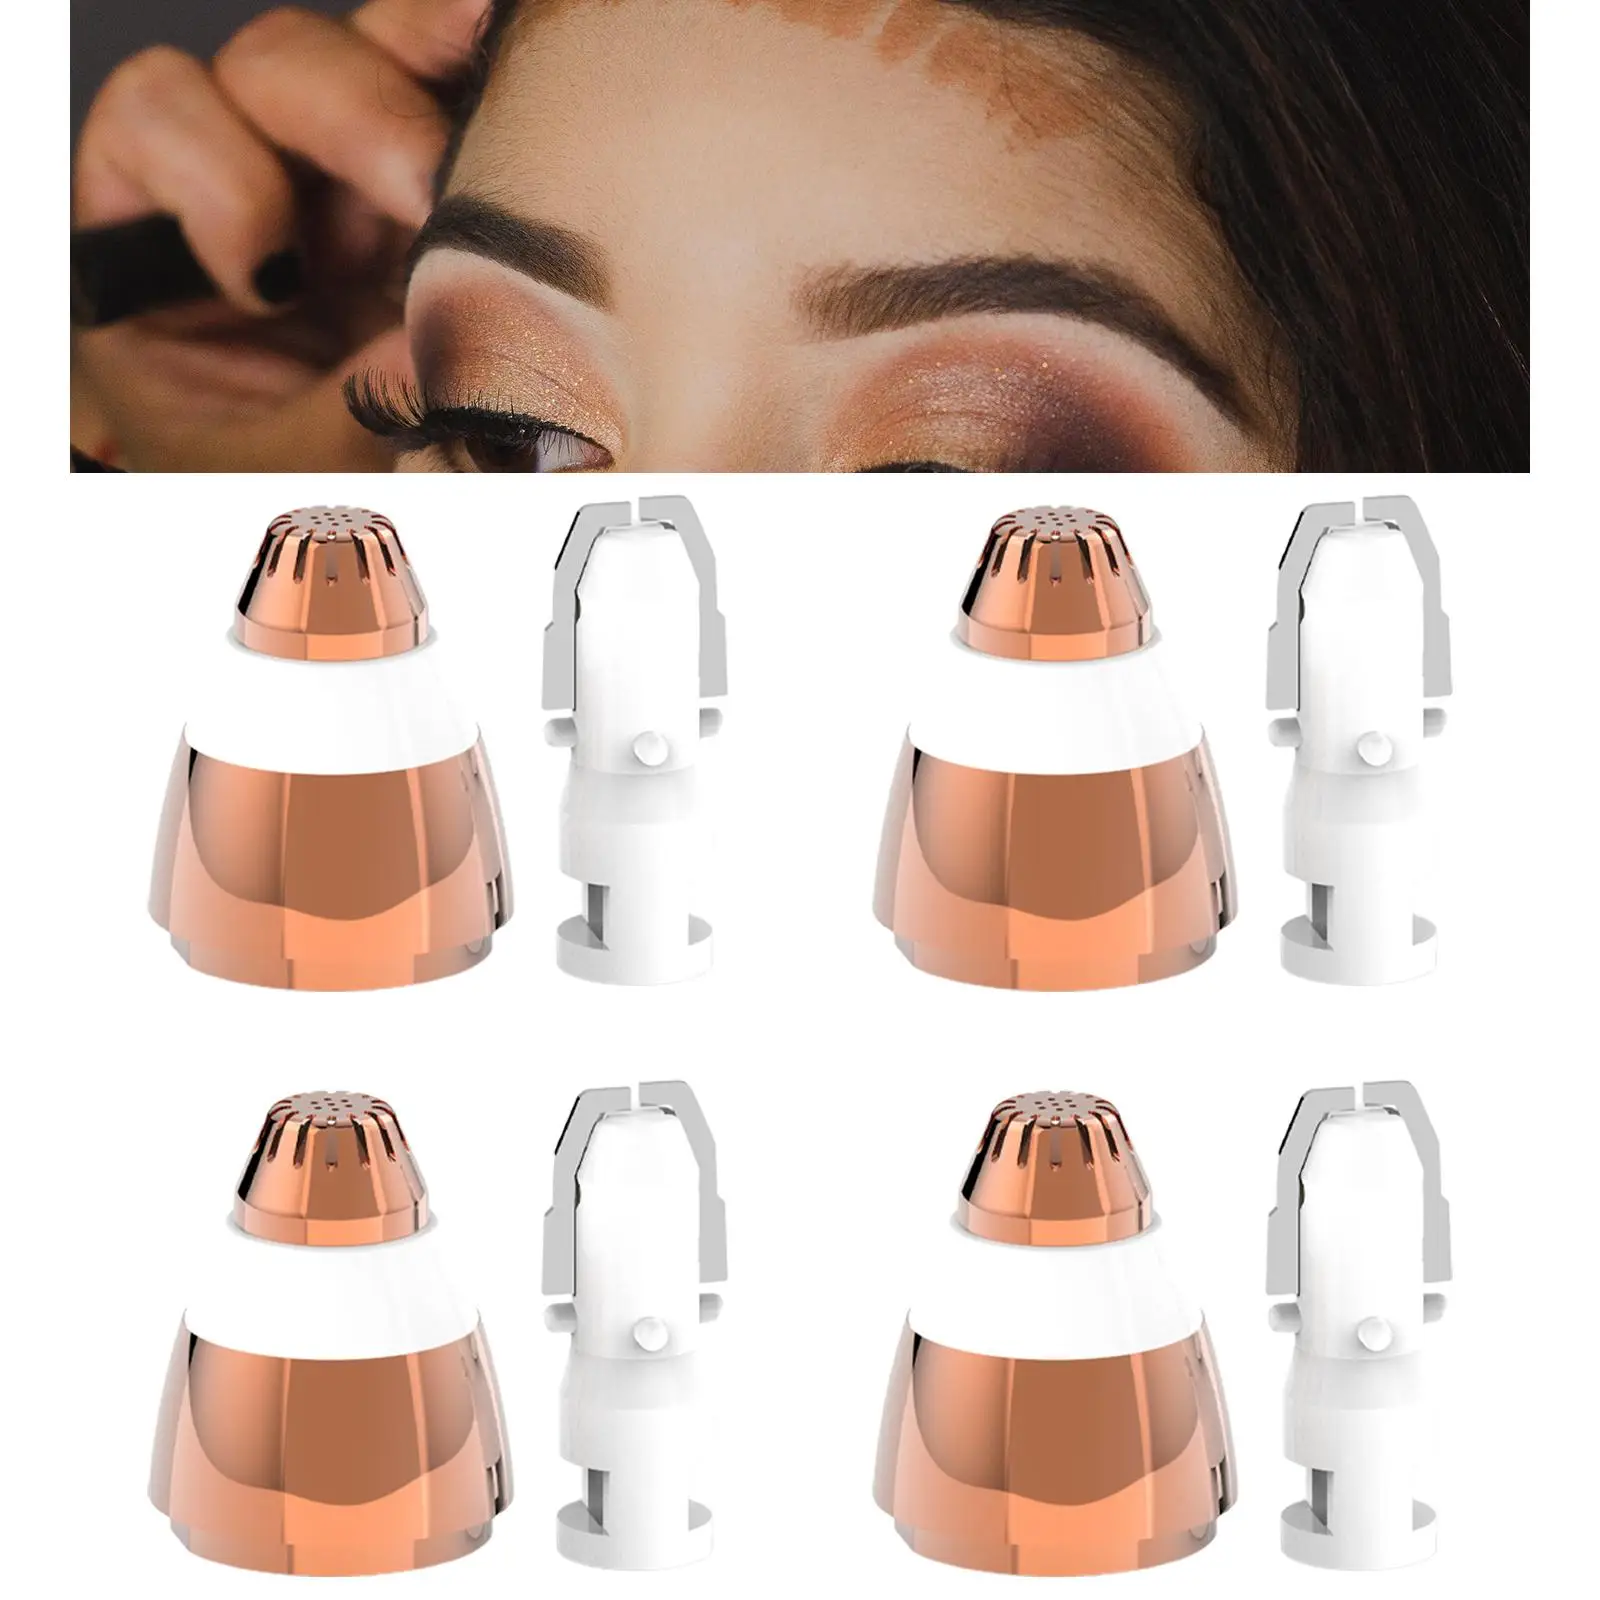 4 Sets Eyebrow Trimmer Replacement Heads Eye Brow Epilator Facial Hair Remover Eyebrow Facial Hair Removal Tool Women Supplies